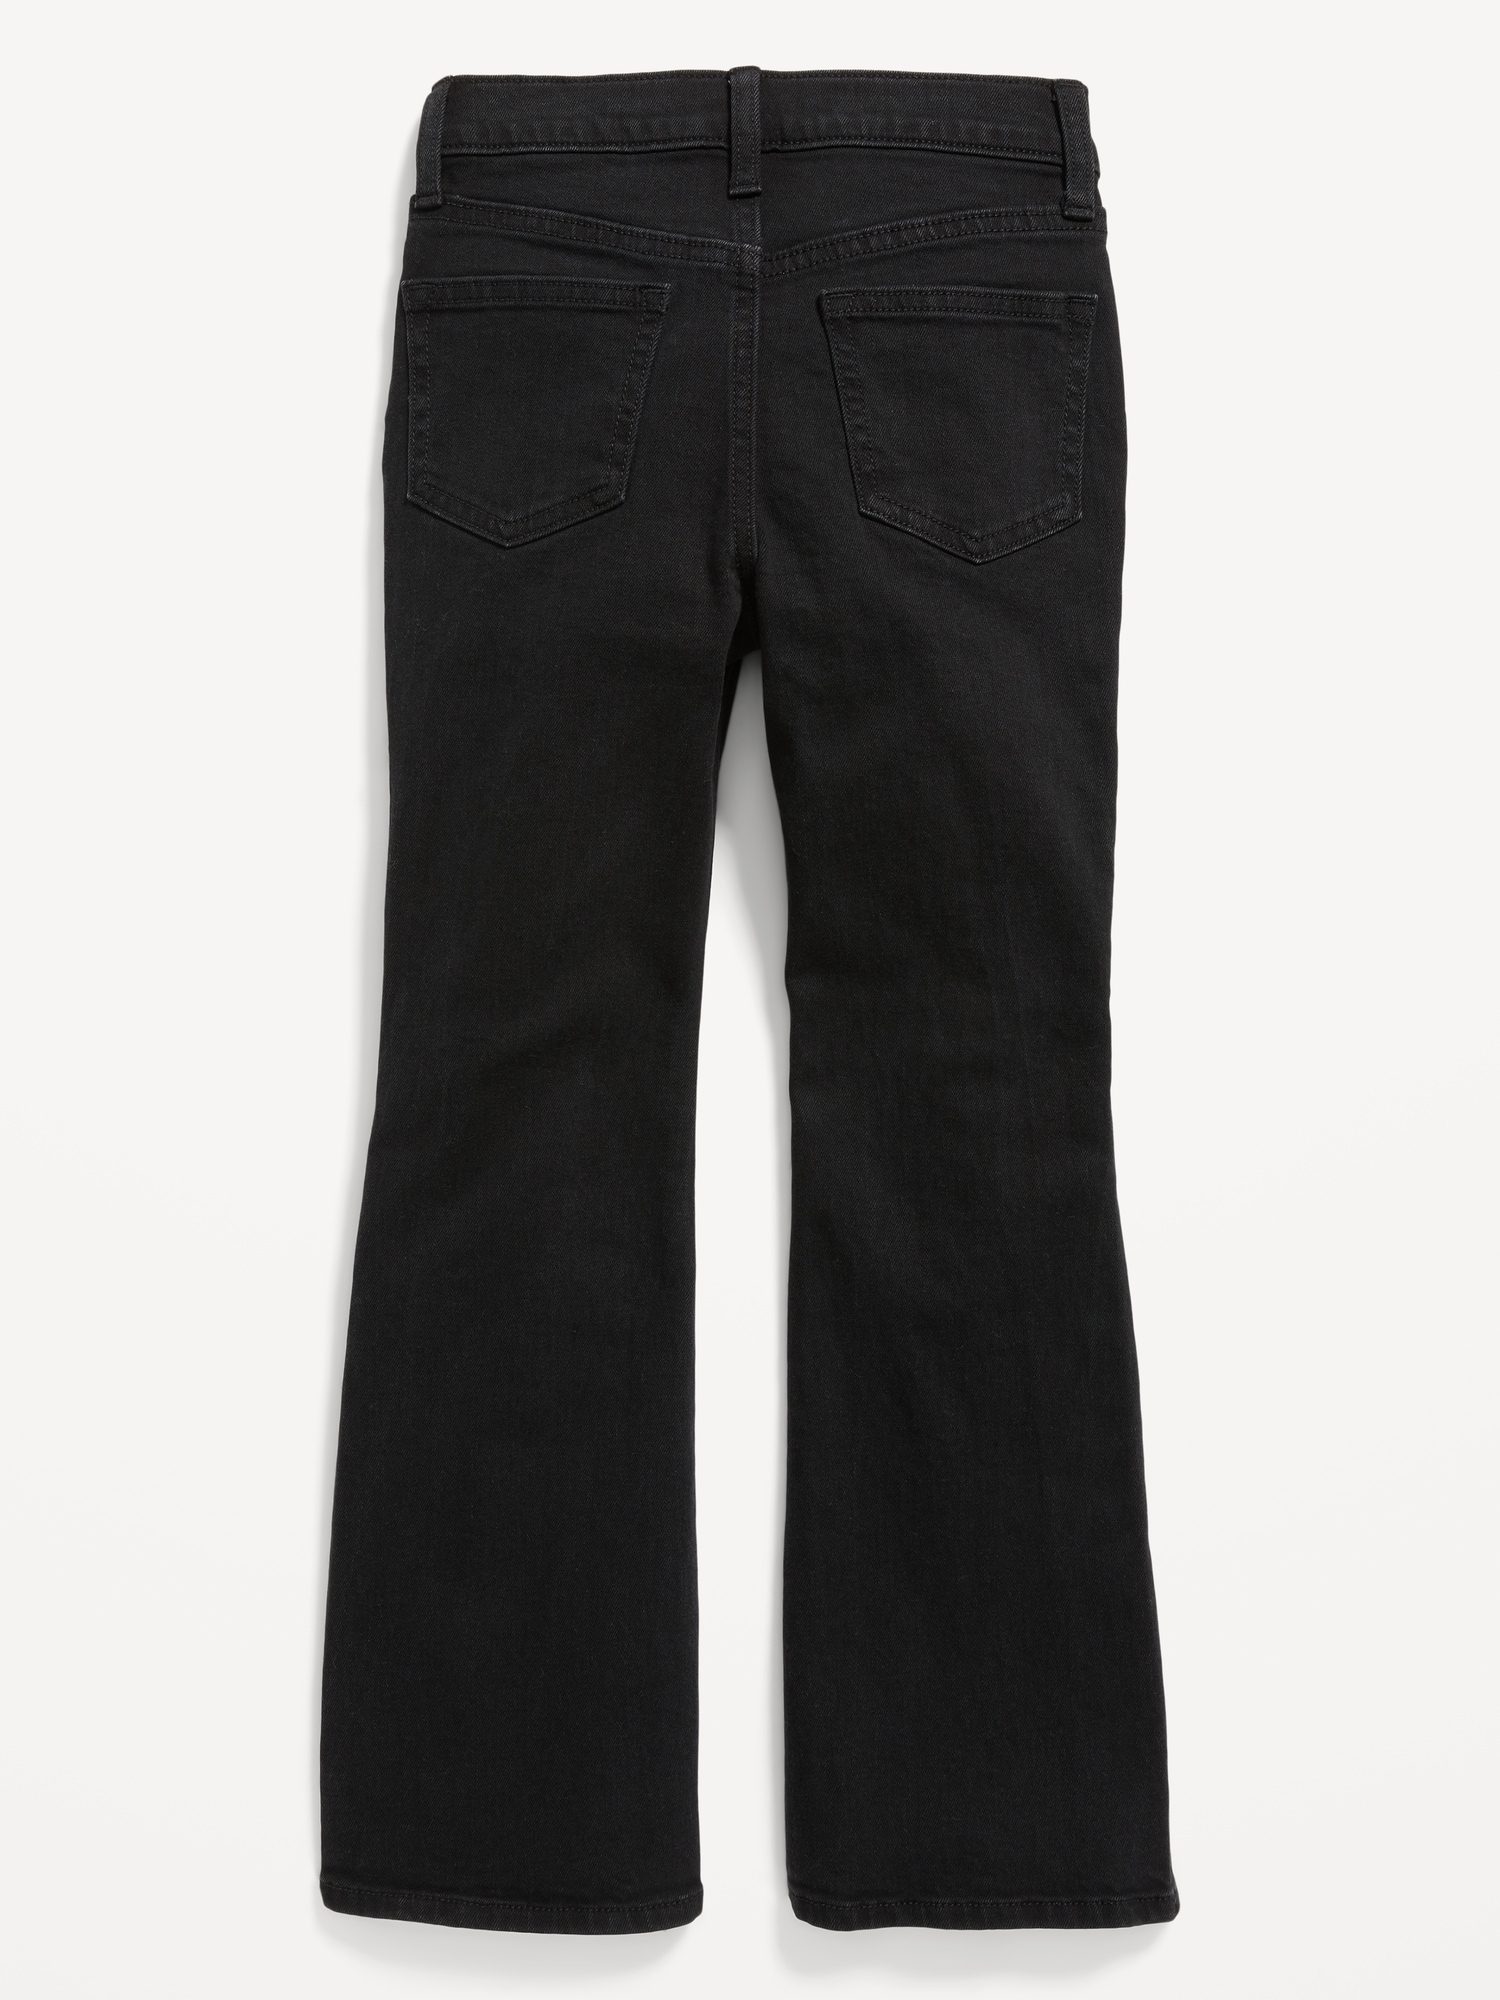 Old Navy Flare Jeans Size 8 Womens Mid Rise Dark Wash Black Denim